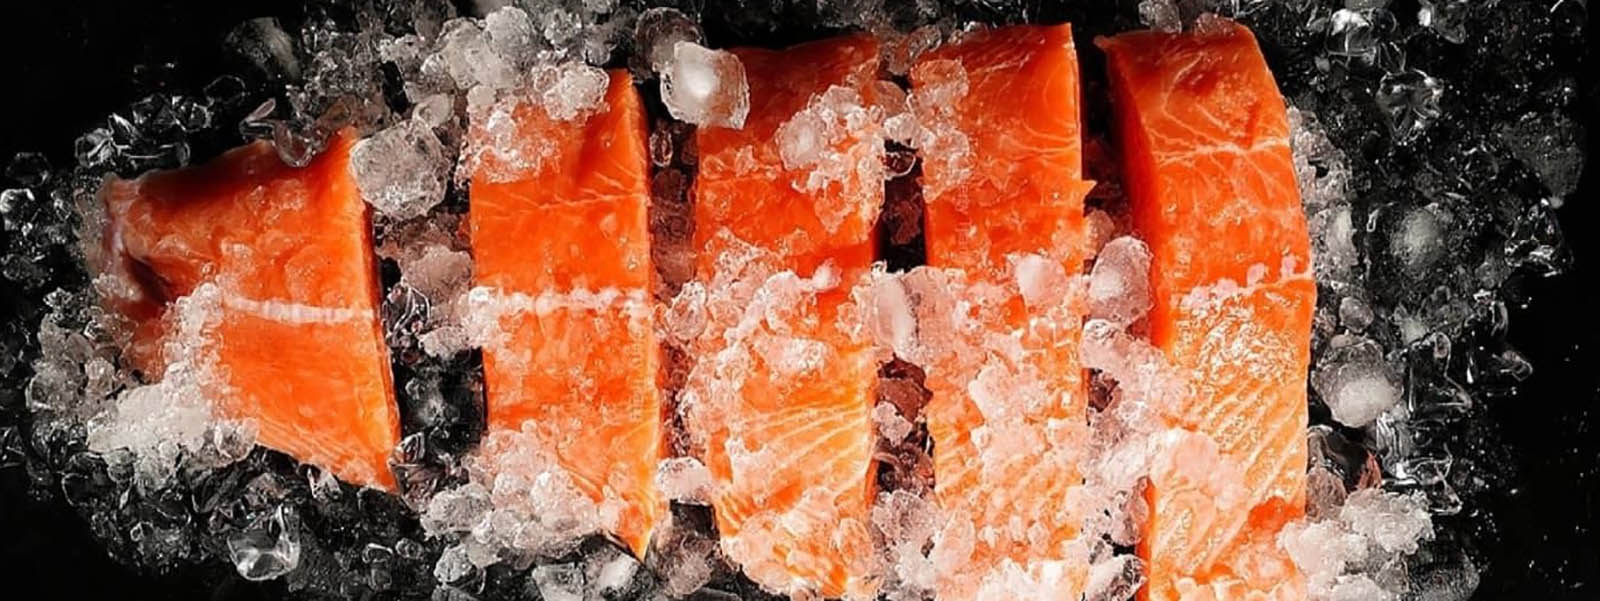 pescado congelado malaga